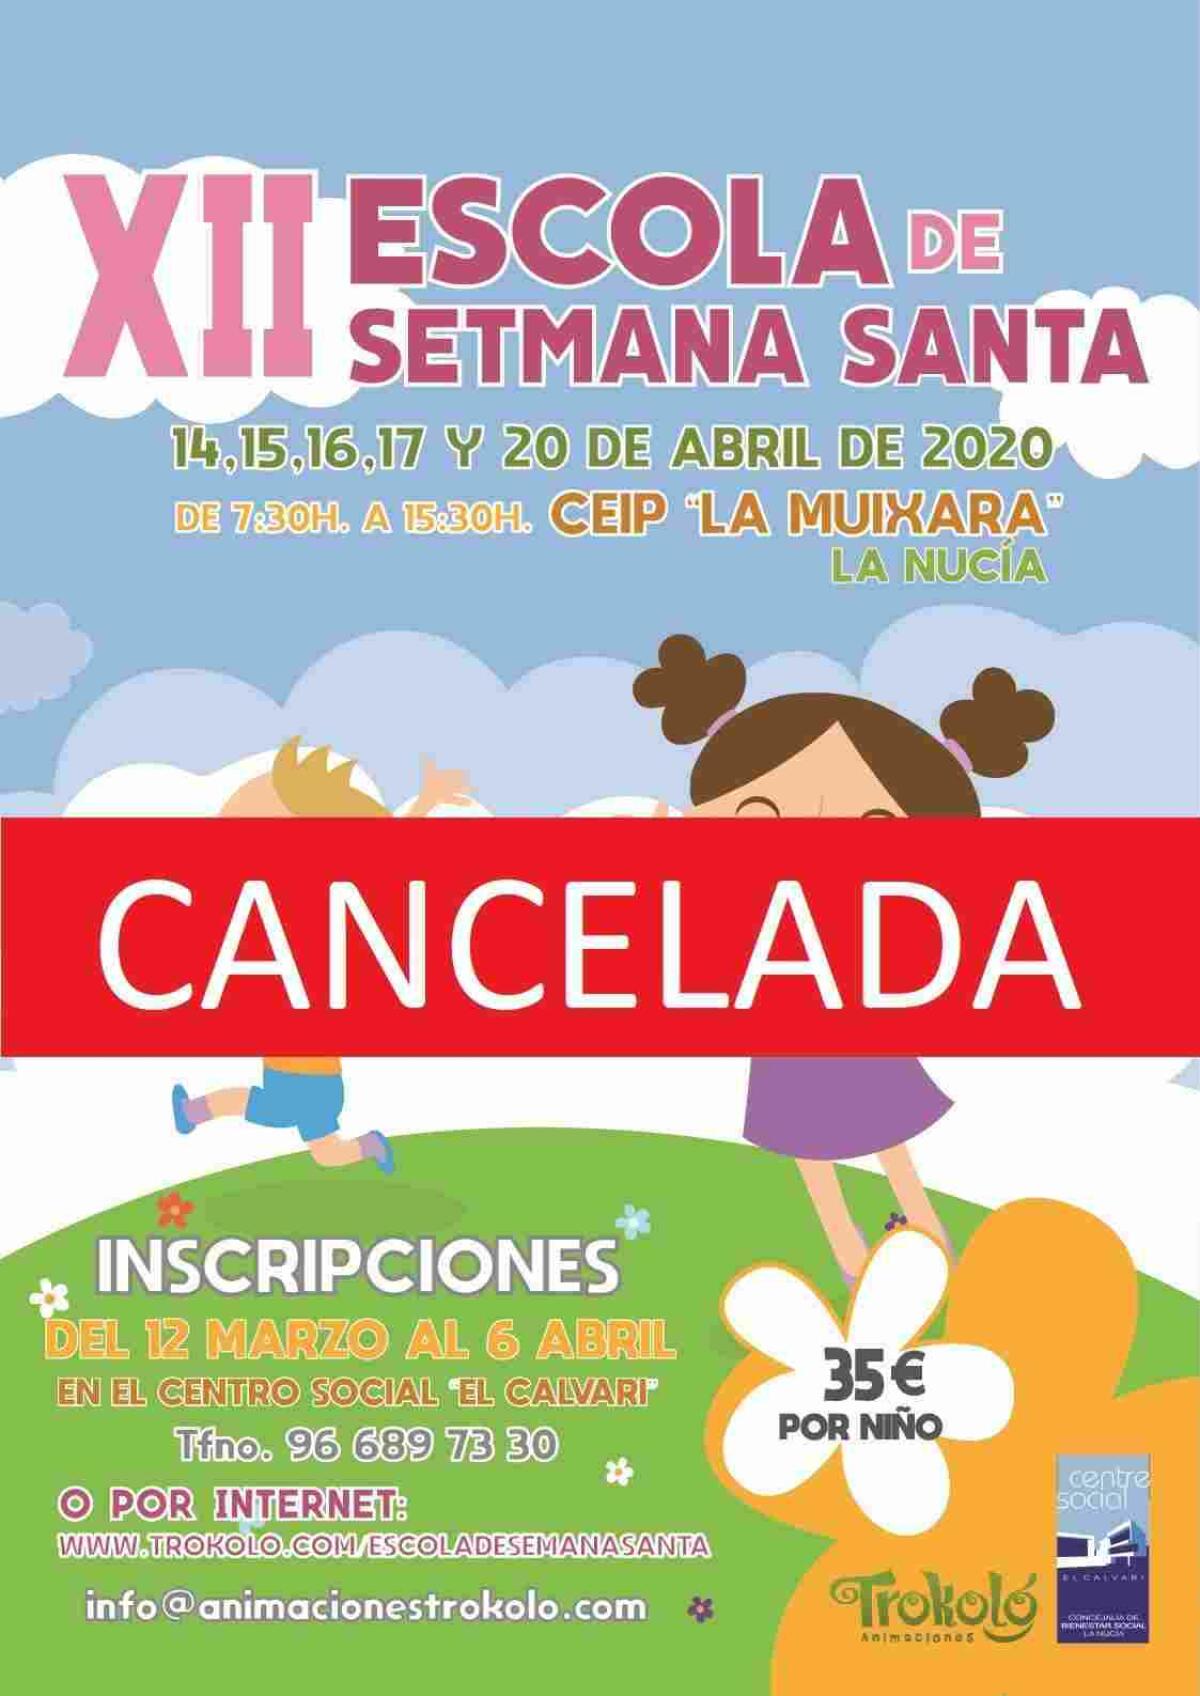 Se cancela la XIII Escola de Setmana Santa de La Nucía.